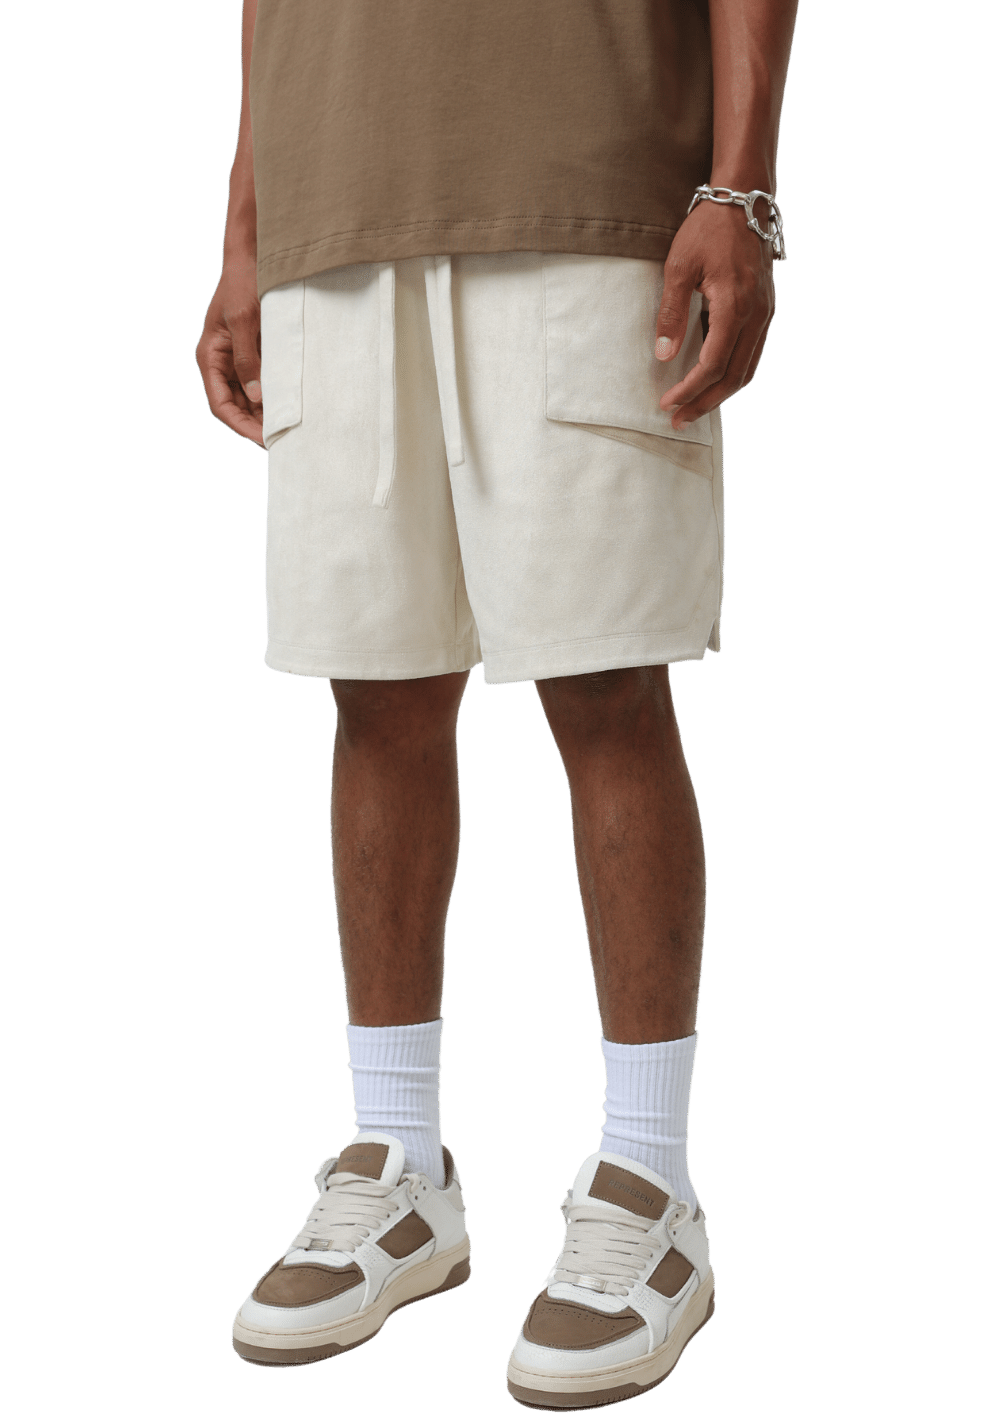 Irregular Pocket Suede Shorts - PSYLOS 1, Irregular Pocket Suede Shorts, Shorts, Boneless, PSYLOS 1